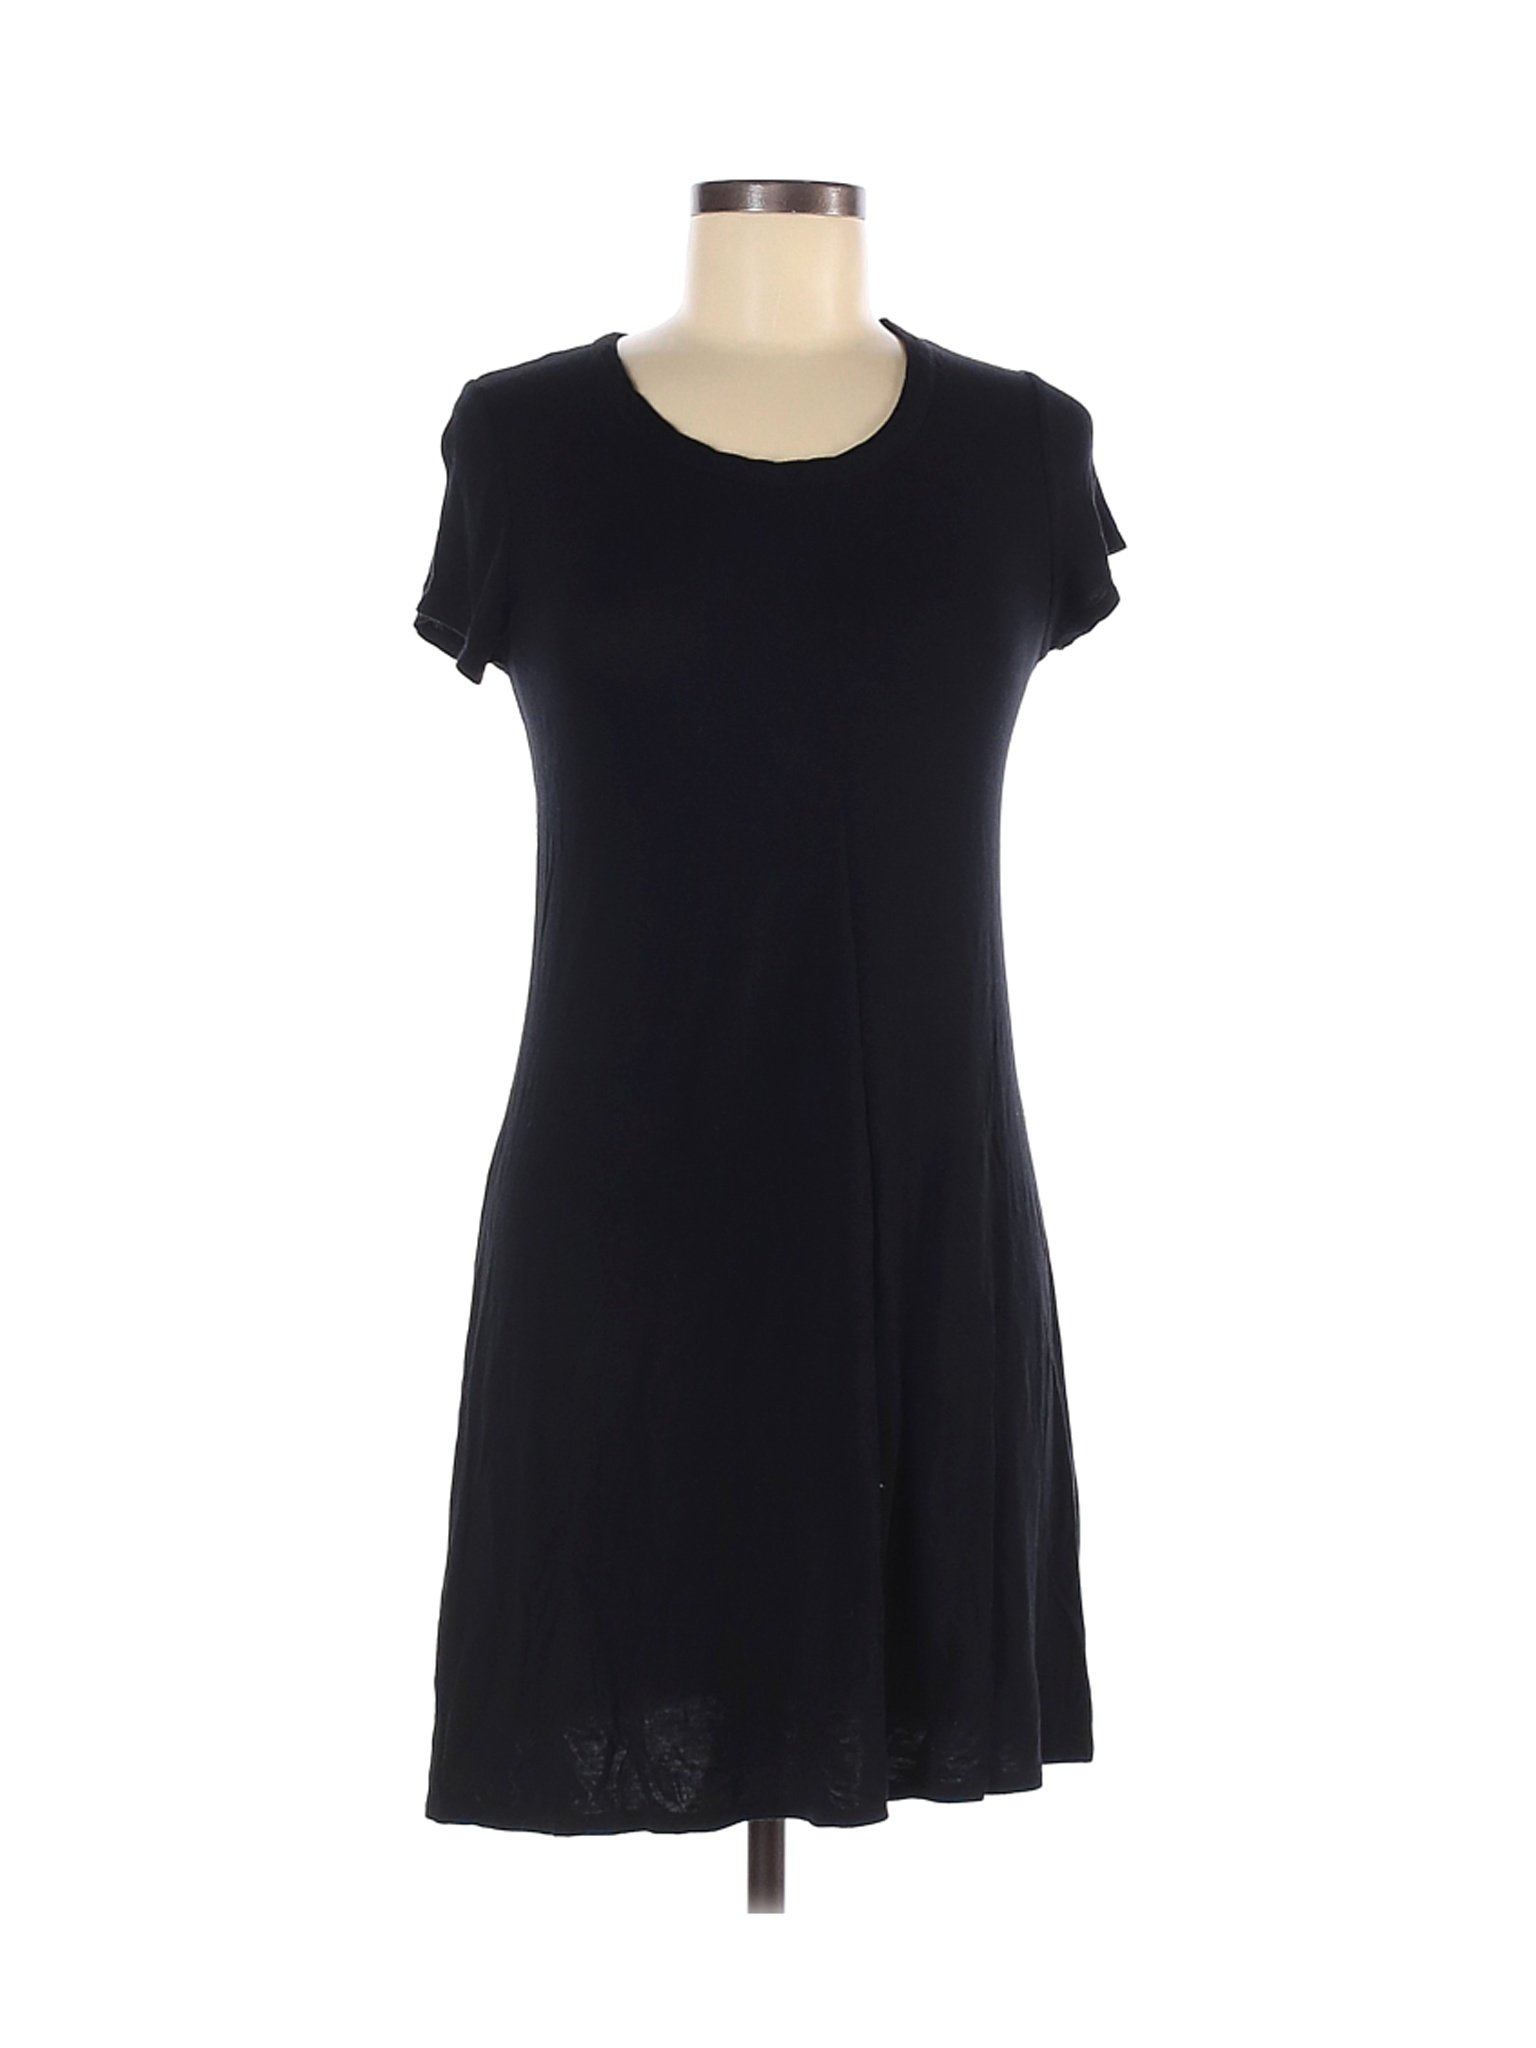 Olivia Rae Women Black Casual Dress M | eBay